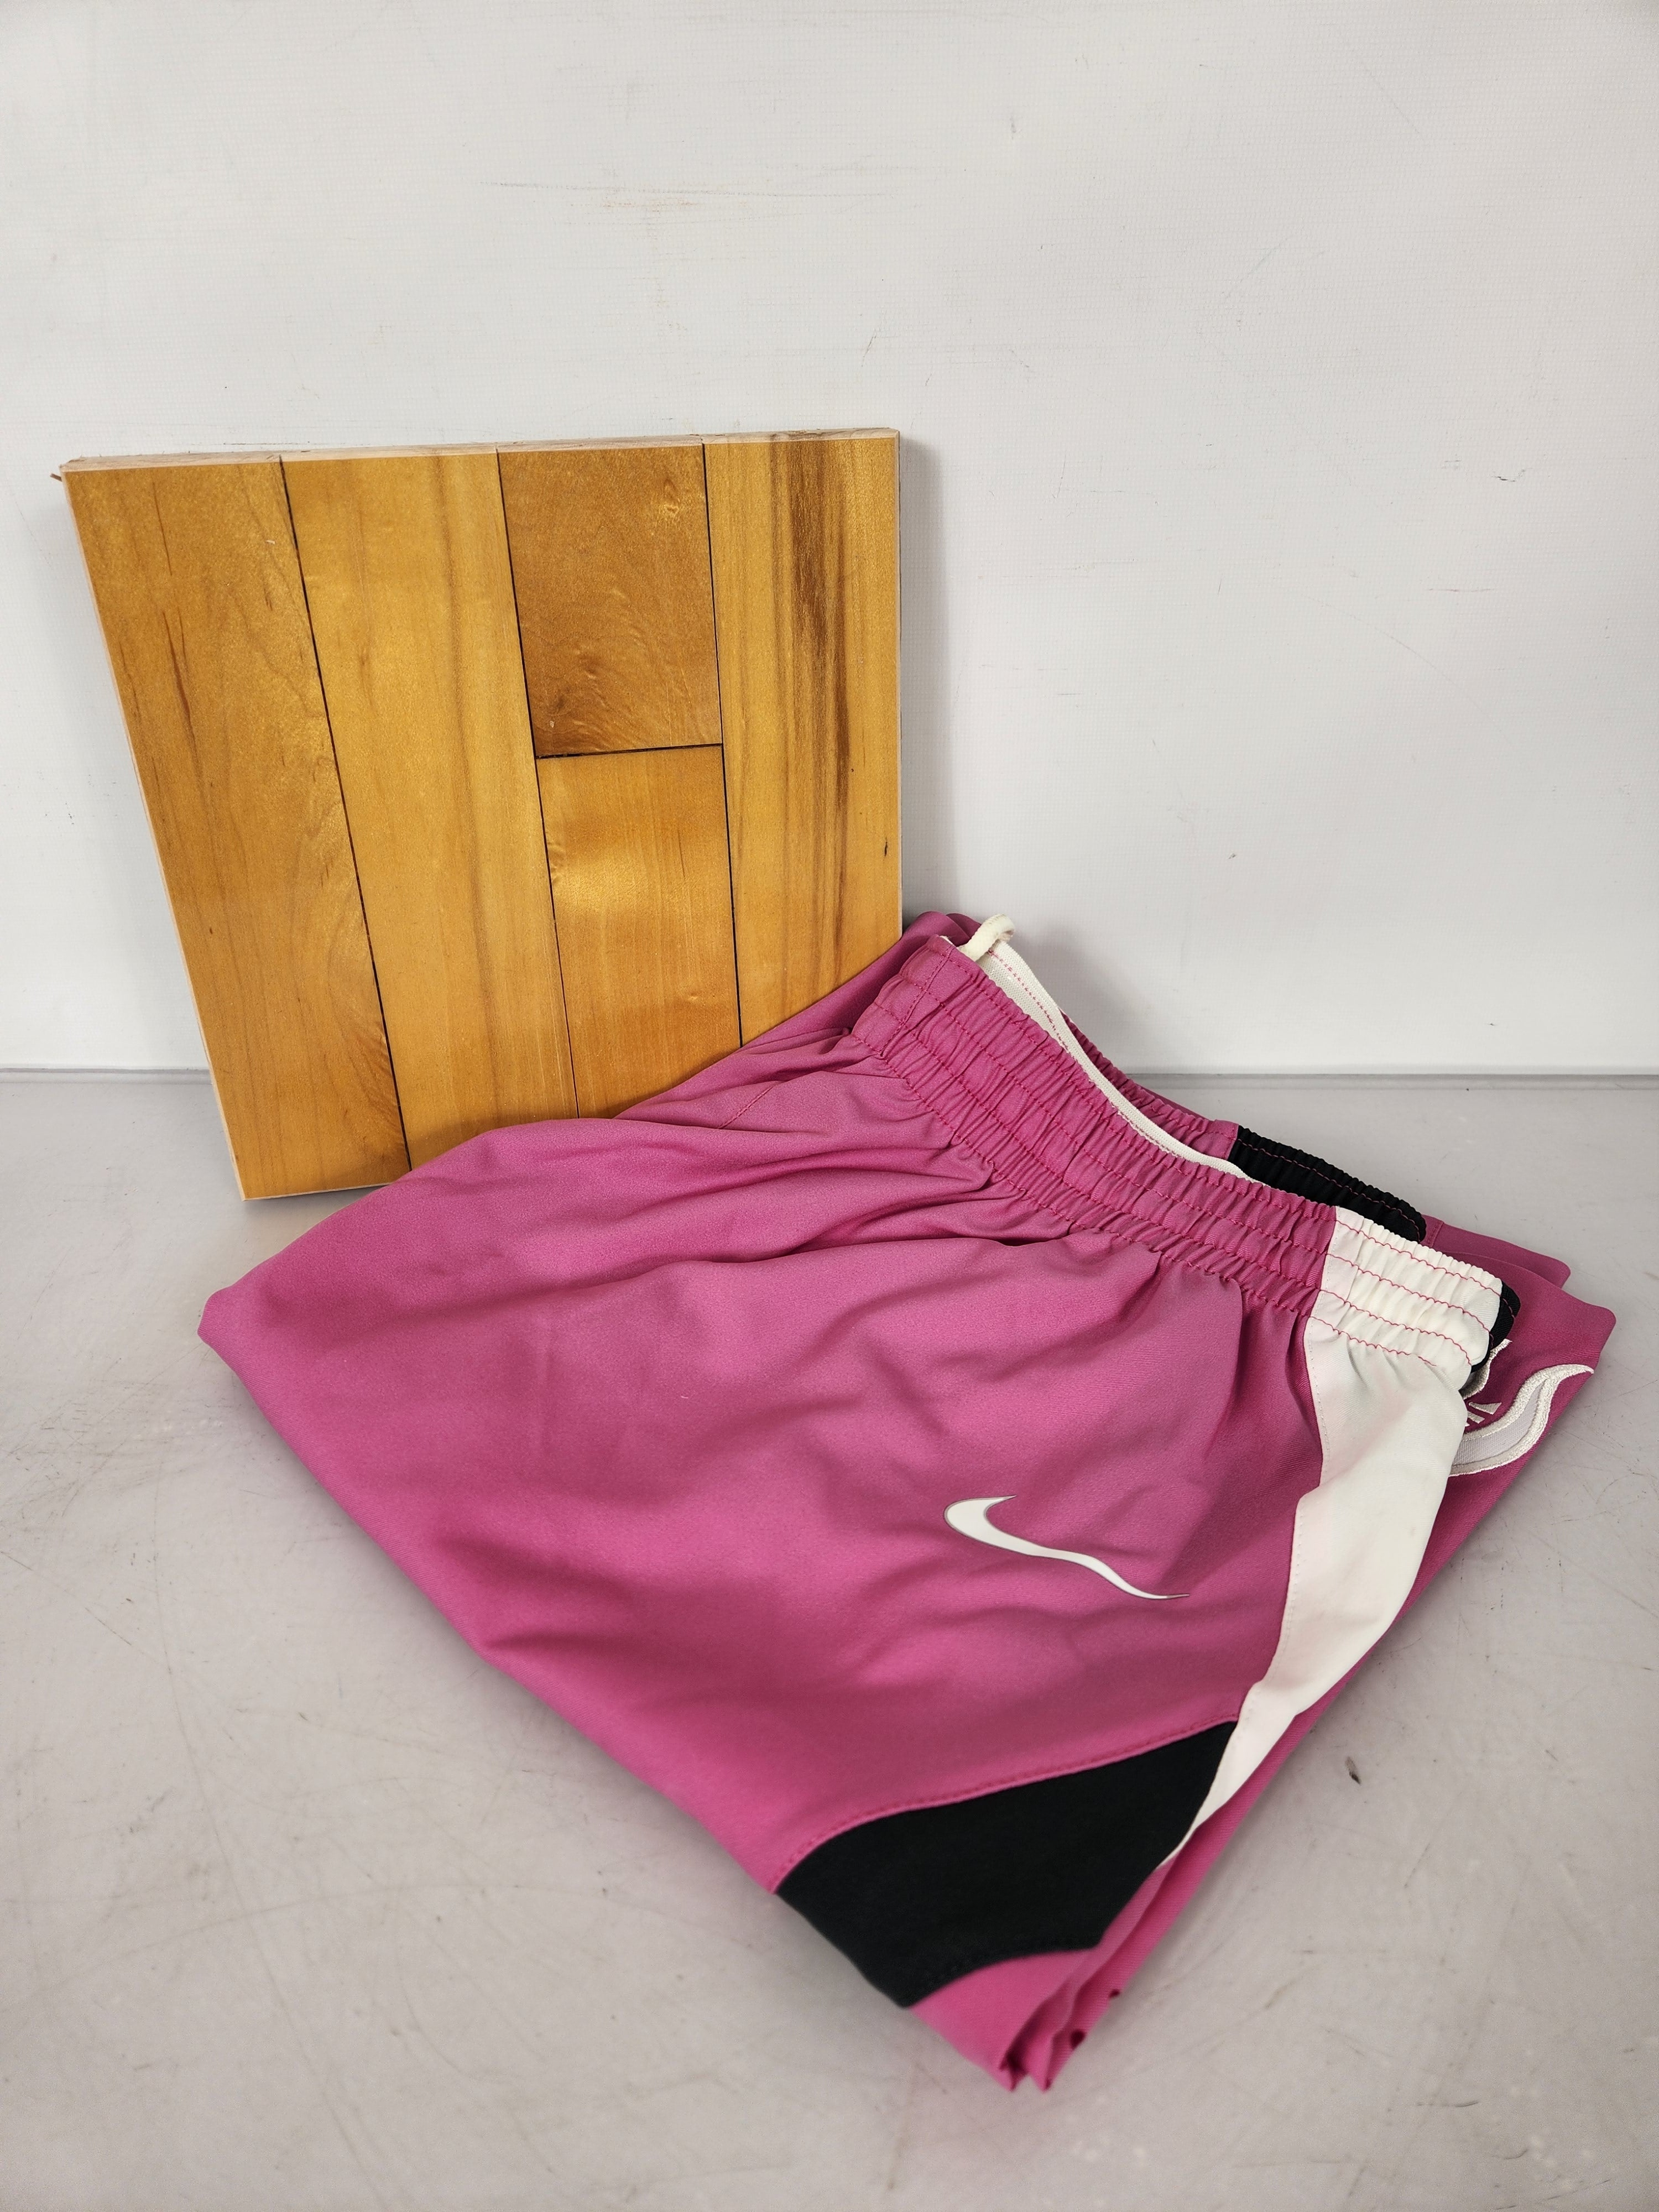 Bundle #76 Basketball Championship Floor Plain with Women's 2012-2013 Pink Basketball Shorts Size 36 +2L